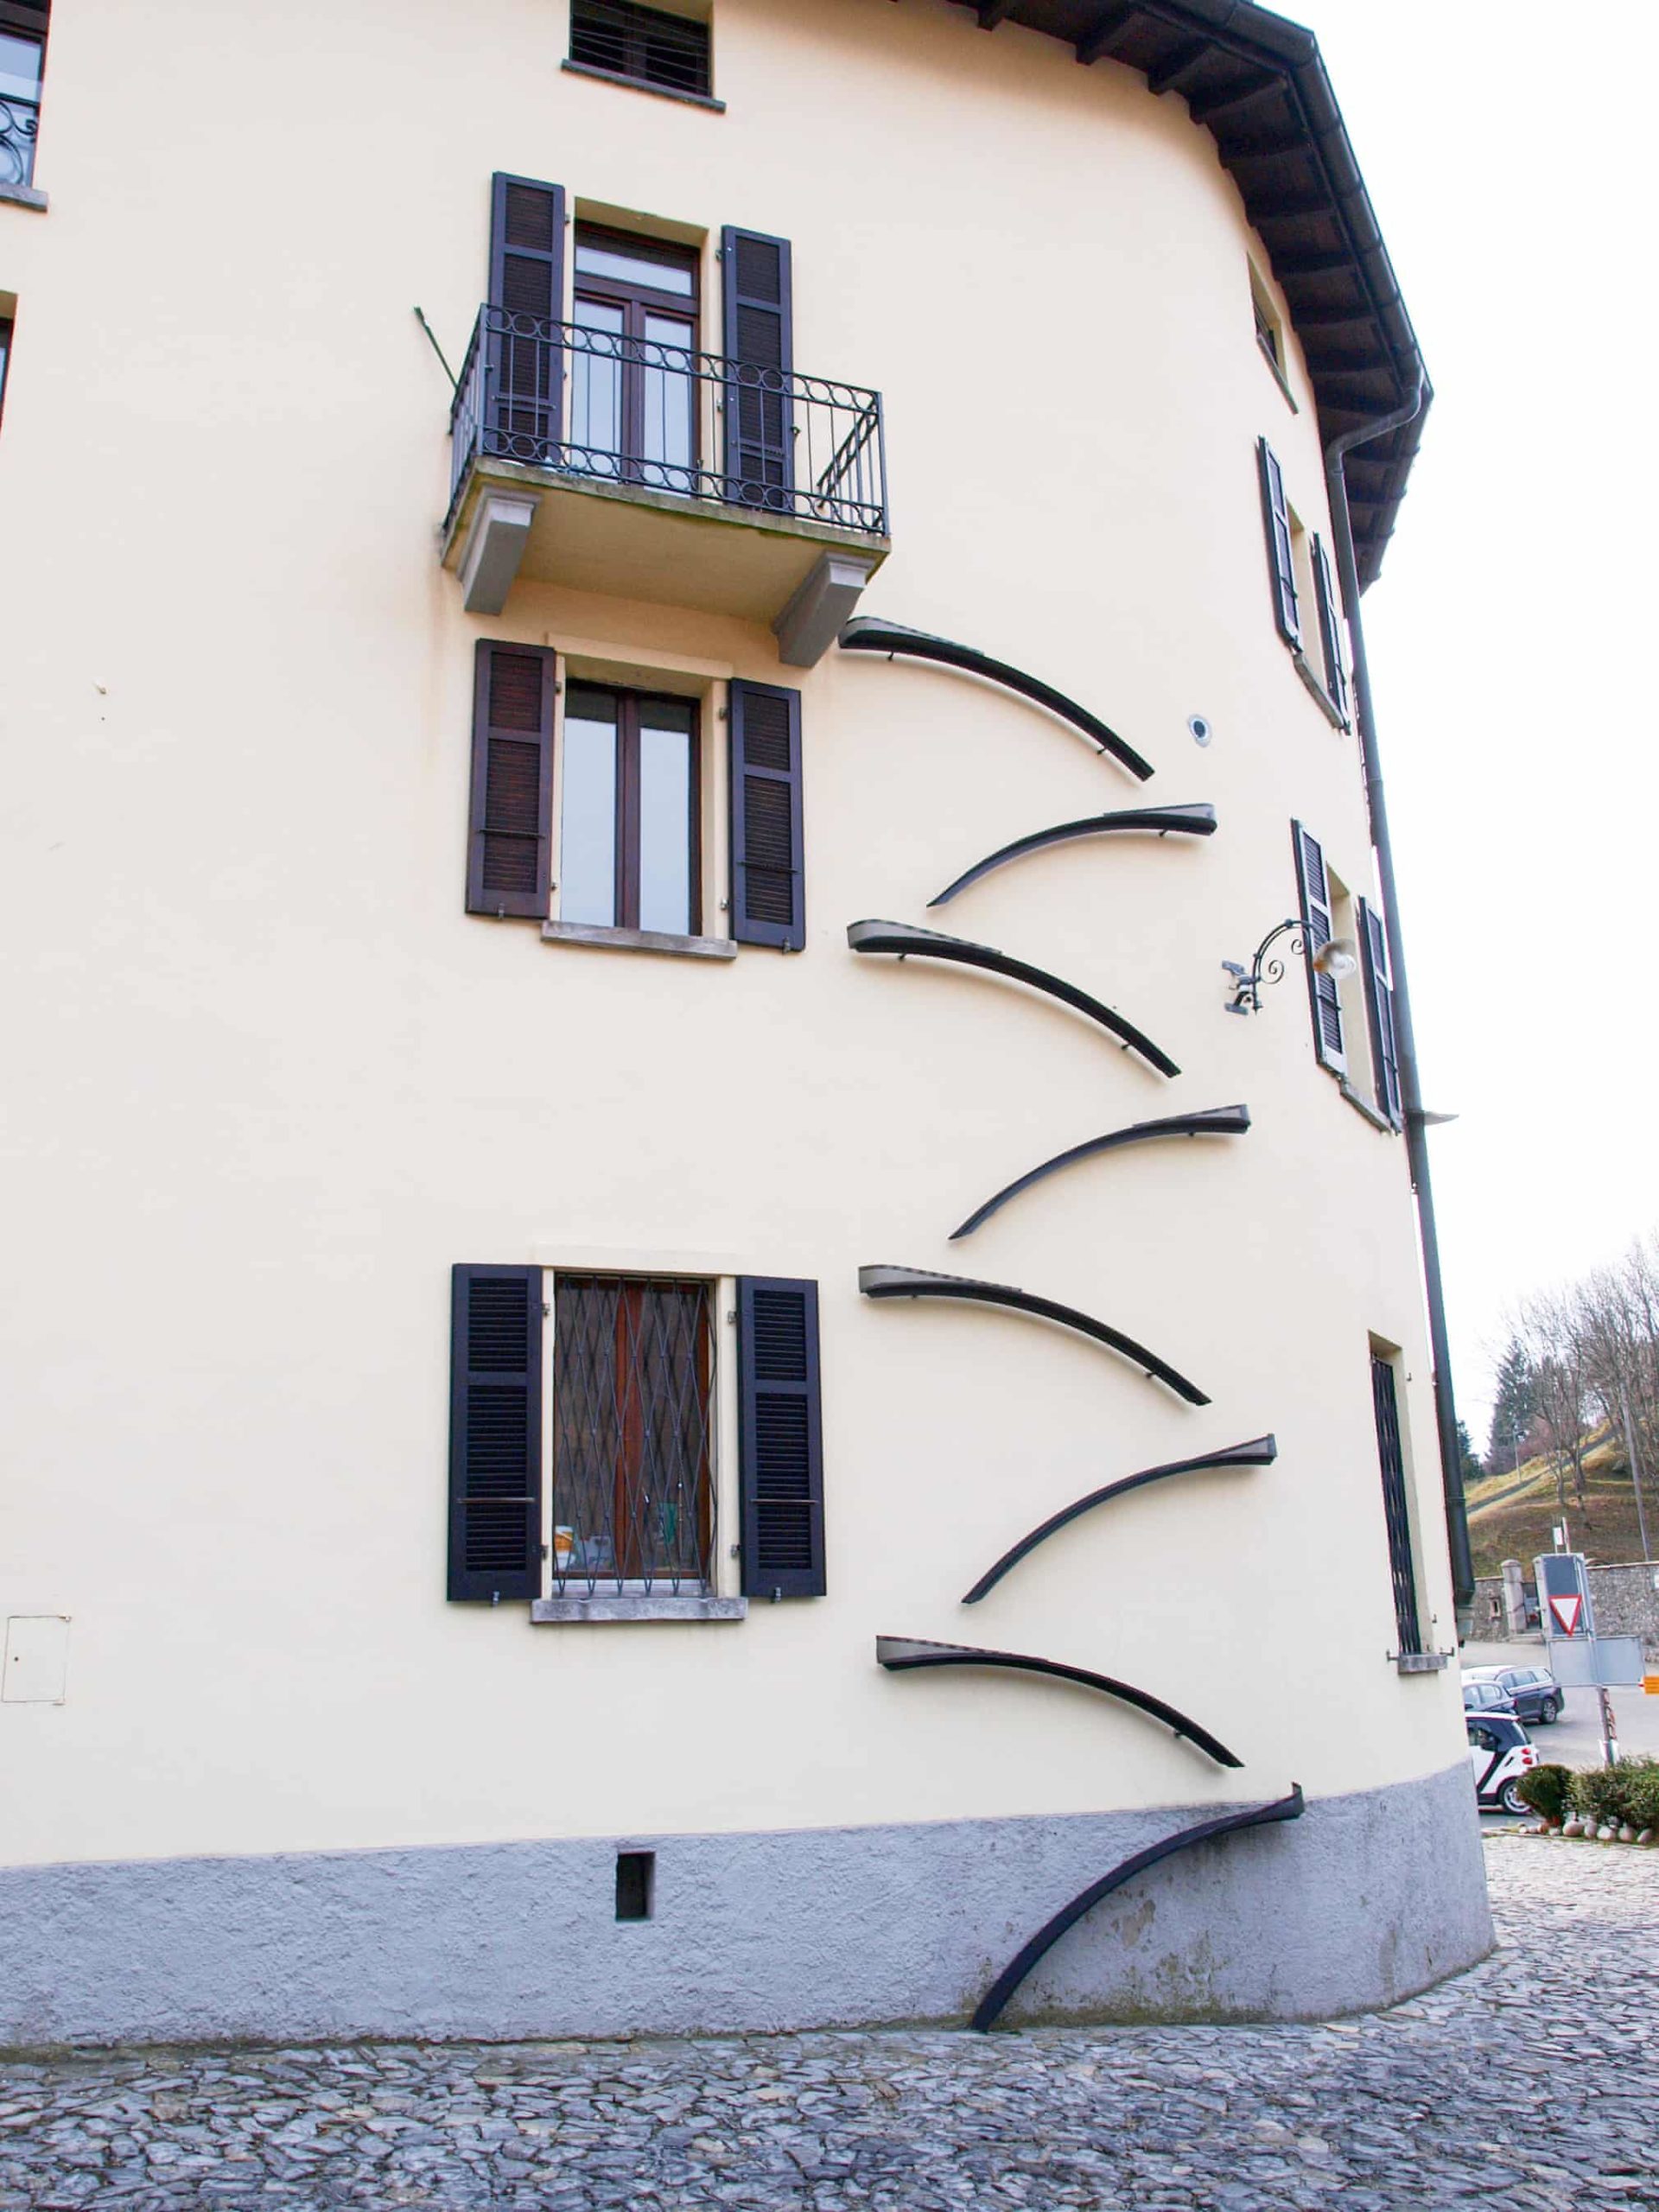 Cat+ladders+in+Bern%2C+Switzerland